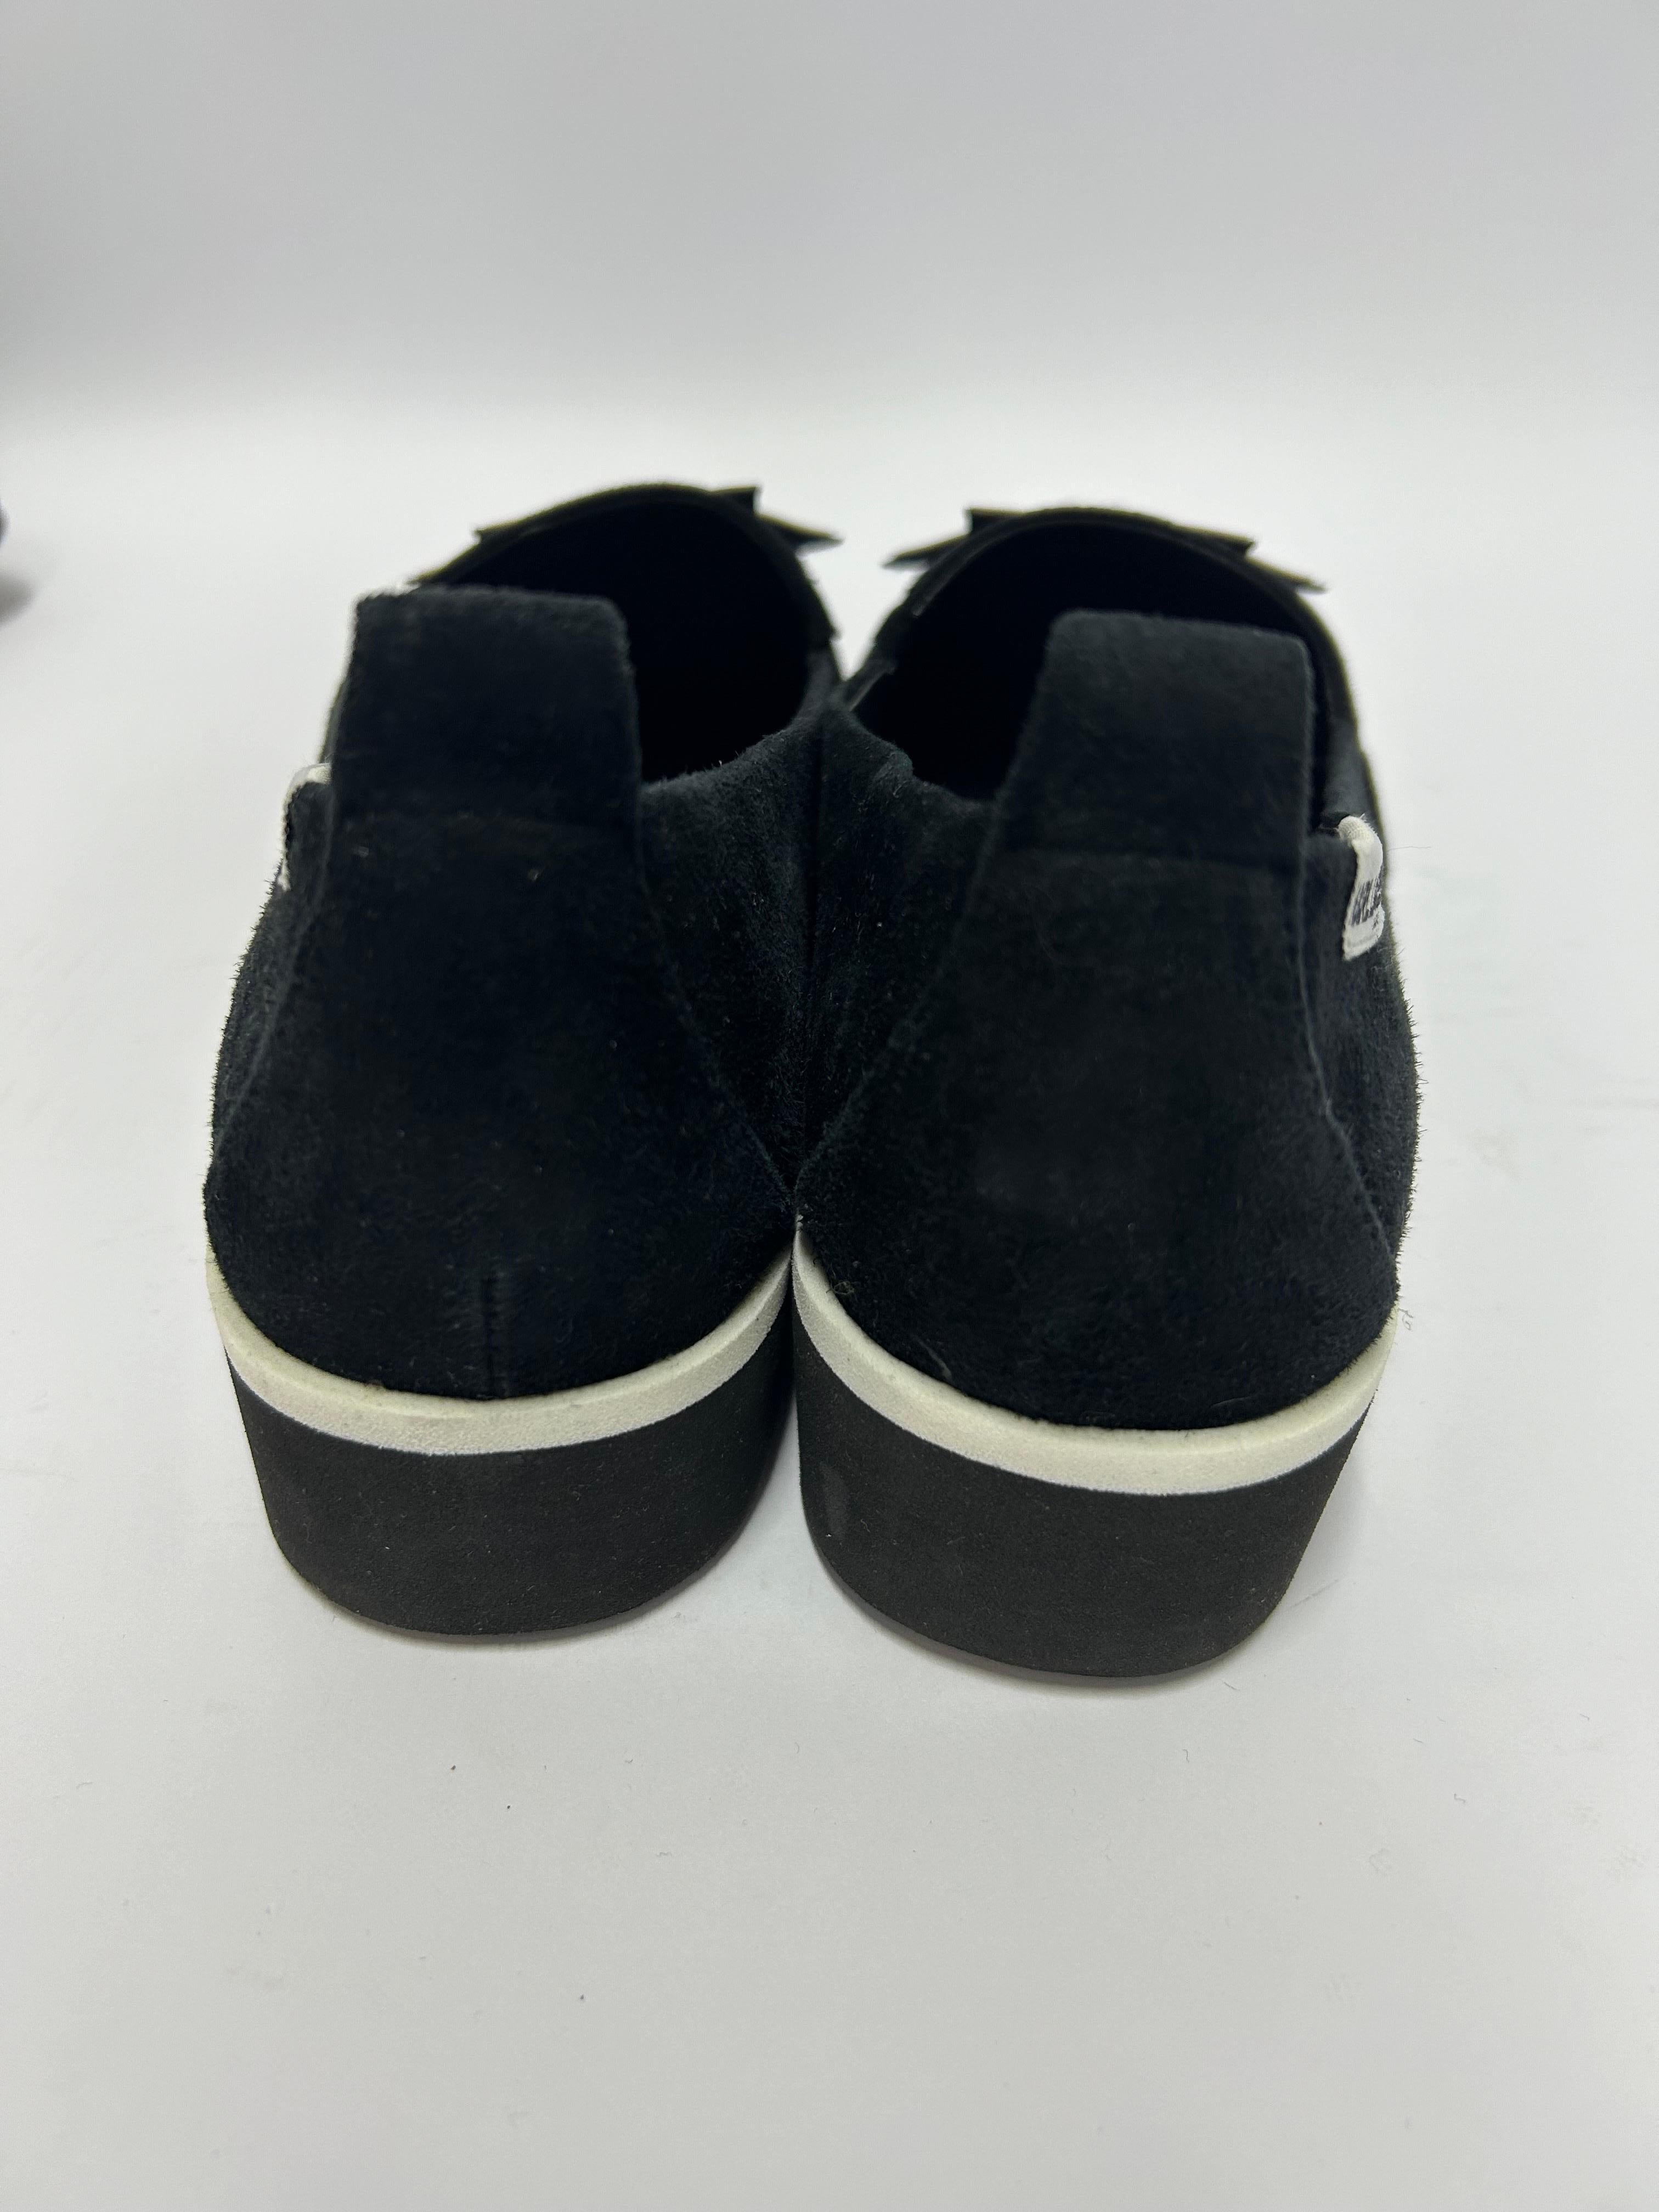 Karl Lagerfeld Paris Carma Sneakers Size US 7.5 4